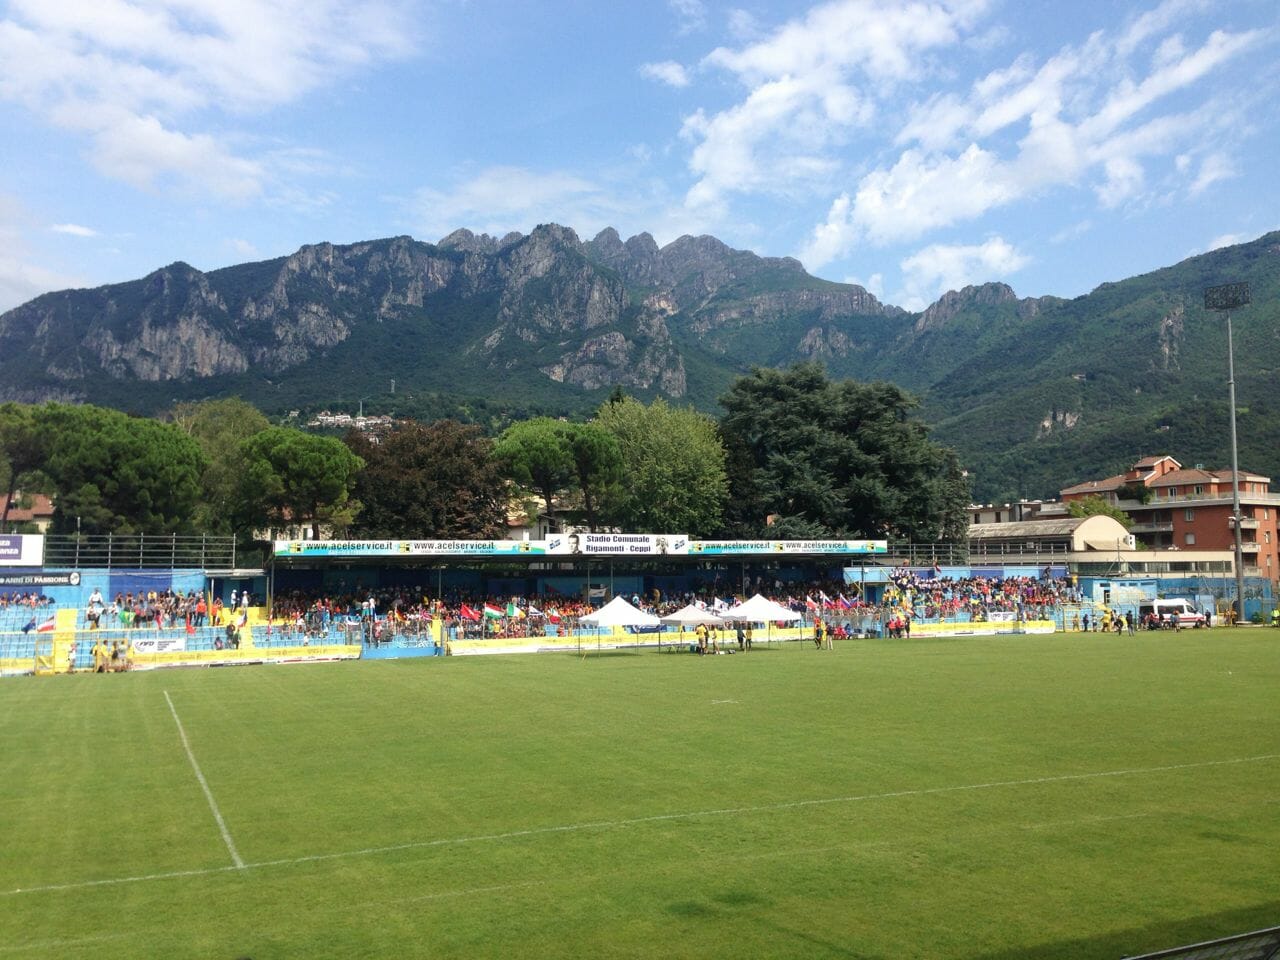 The beautiful stadium setting in Lecco.